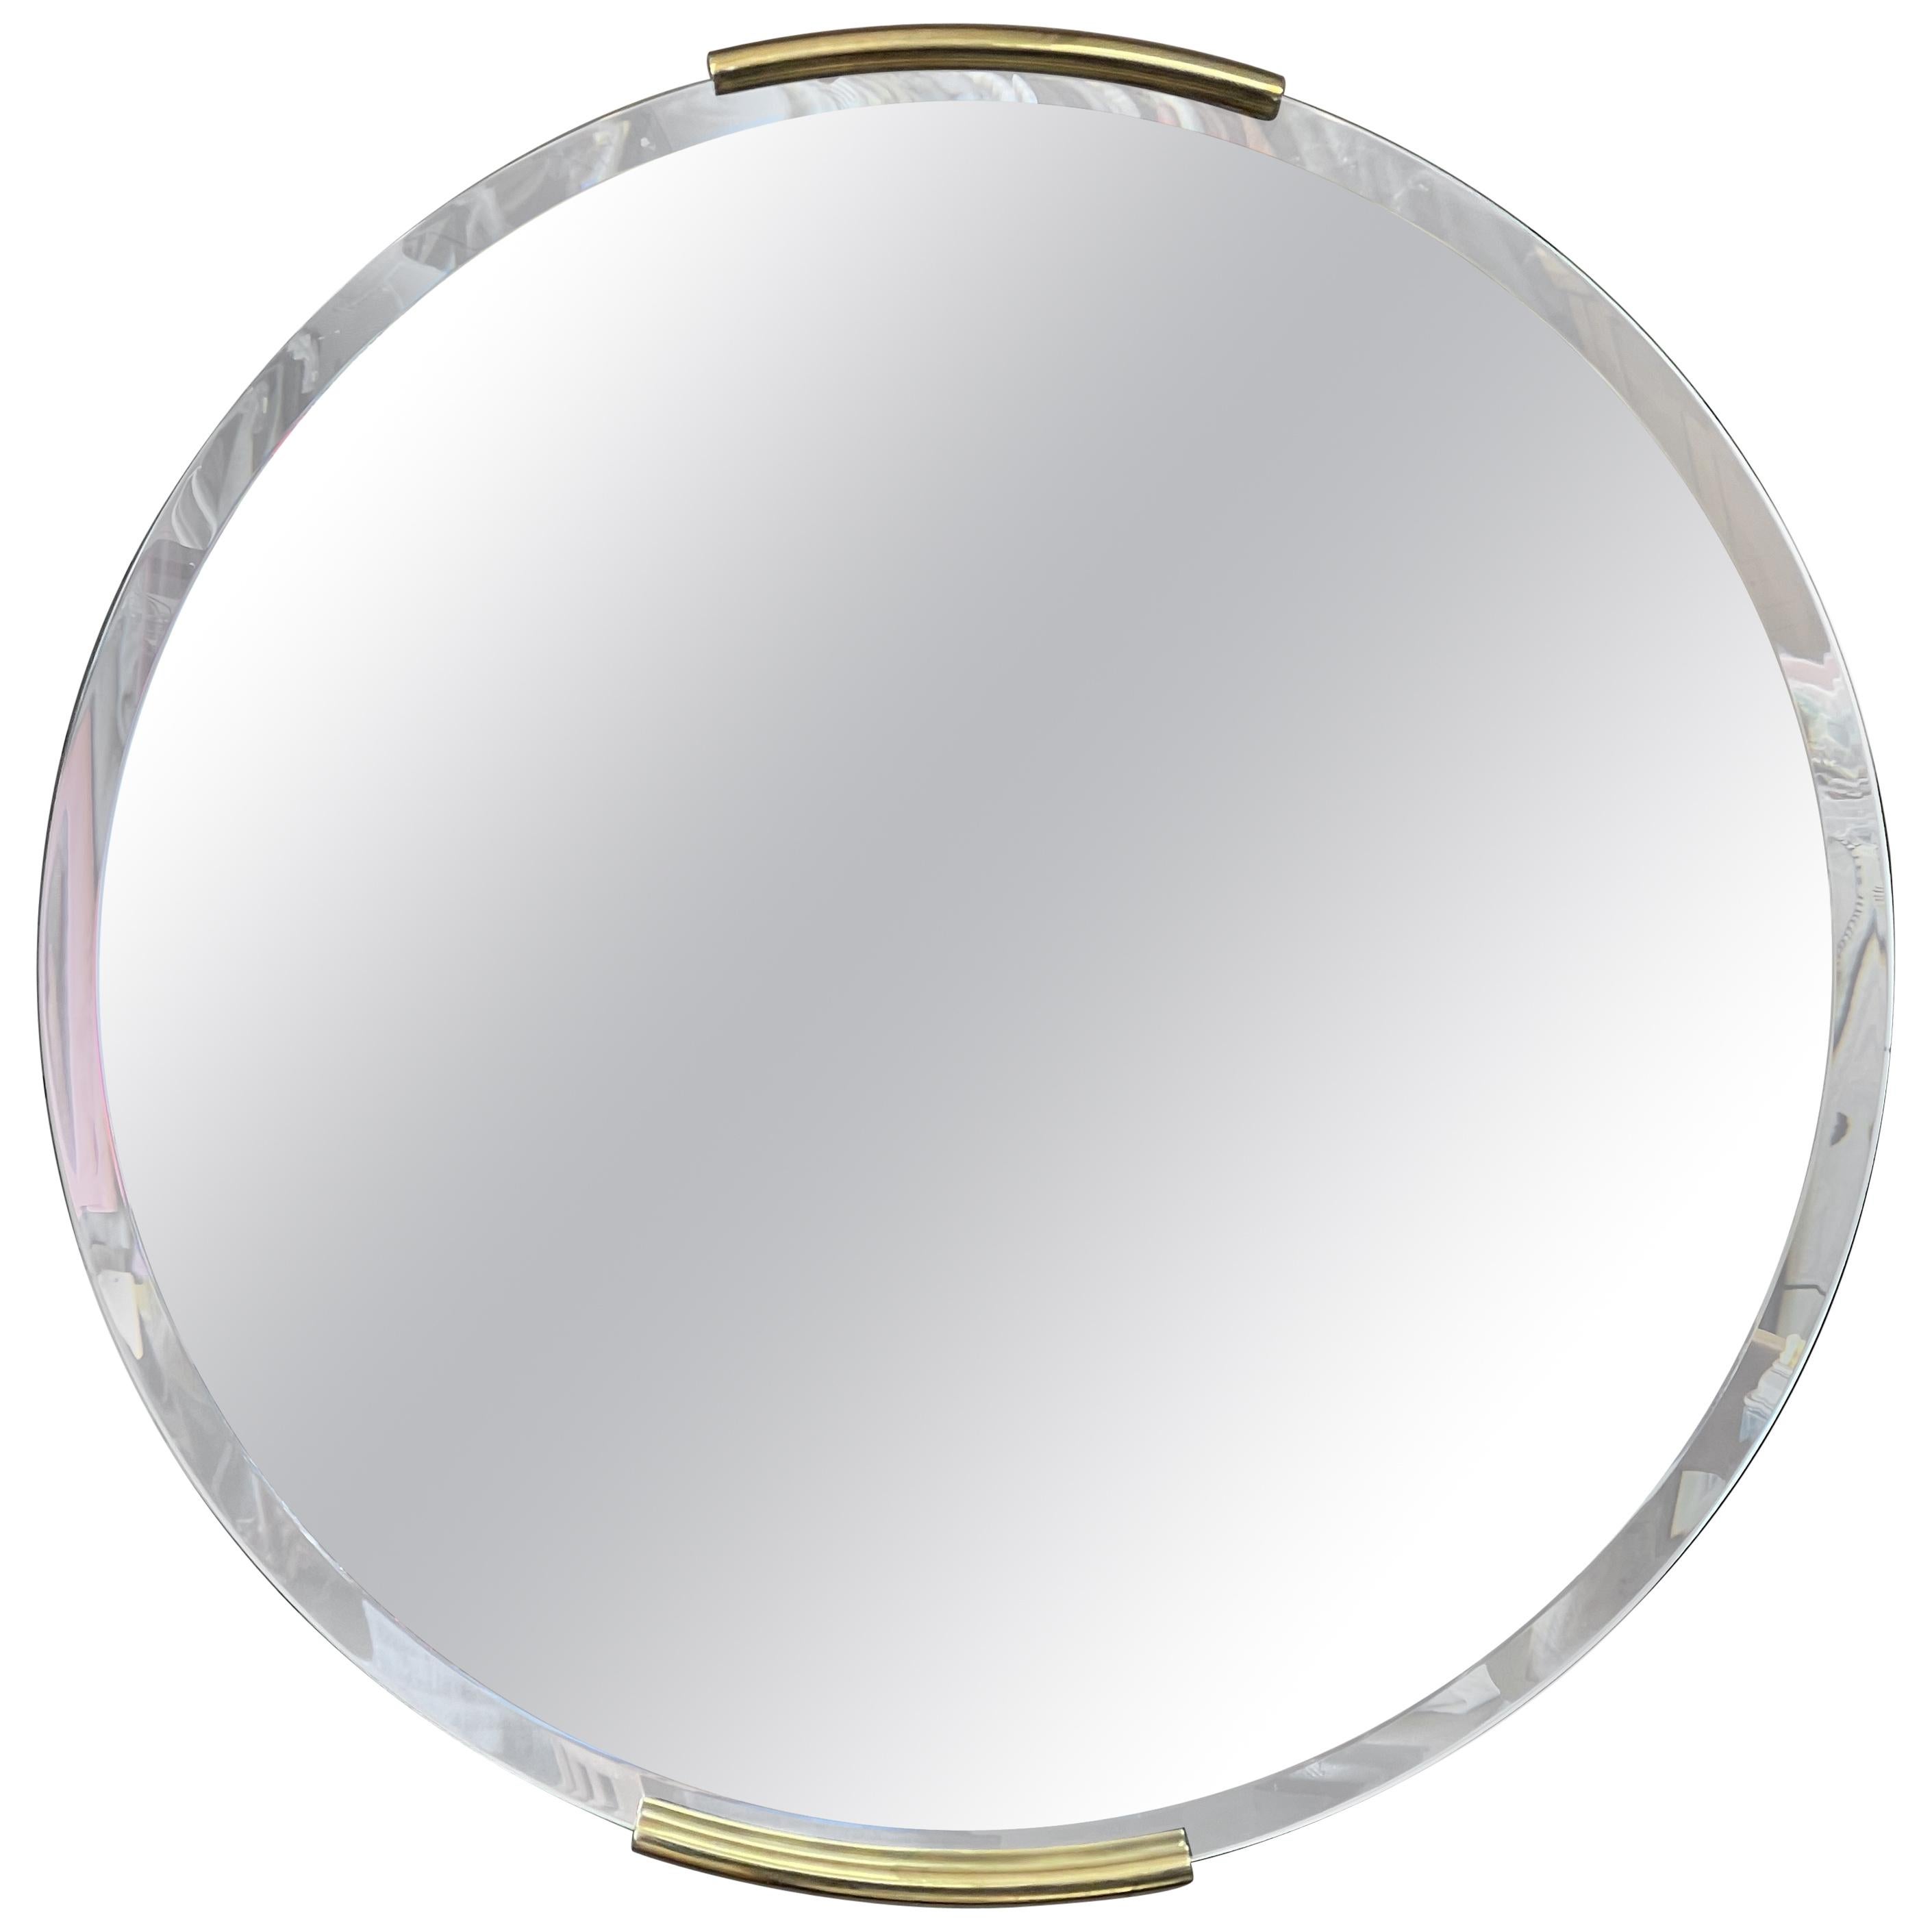 Modernist Round Mirror with Bronze Accents by Milo Baughman for Thayer Coggin